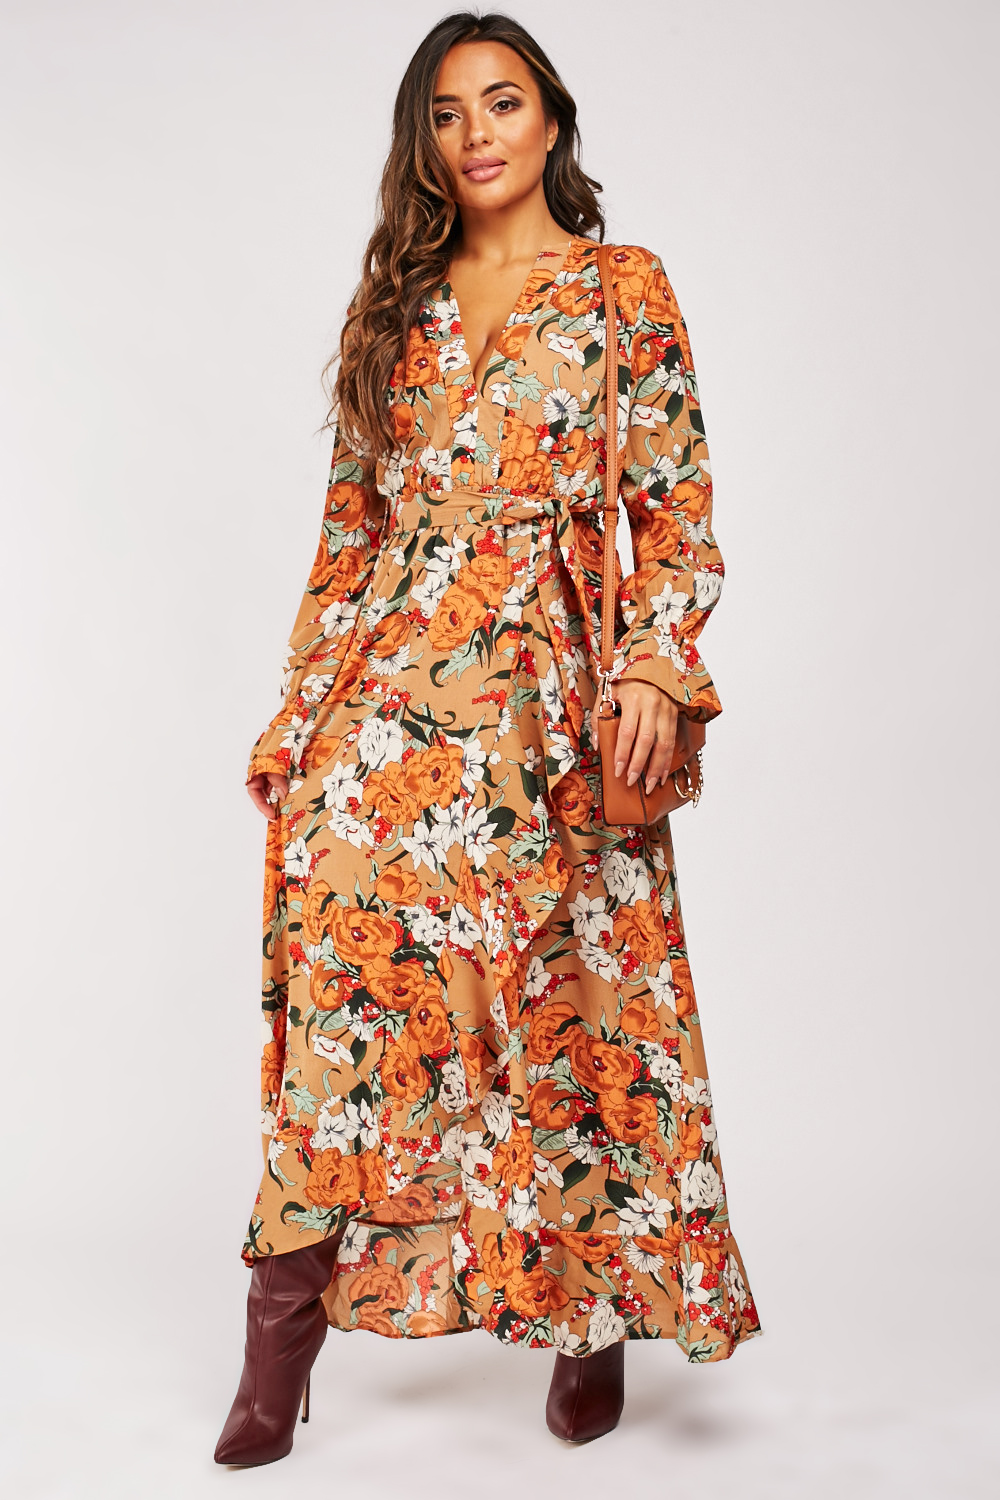 Floral Print Ruffle Wrap Maxi Dress - Just $7